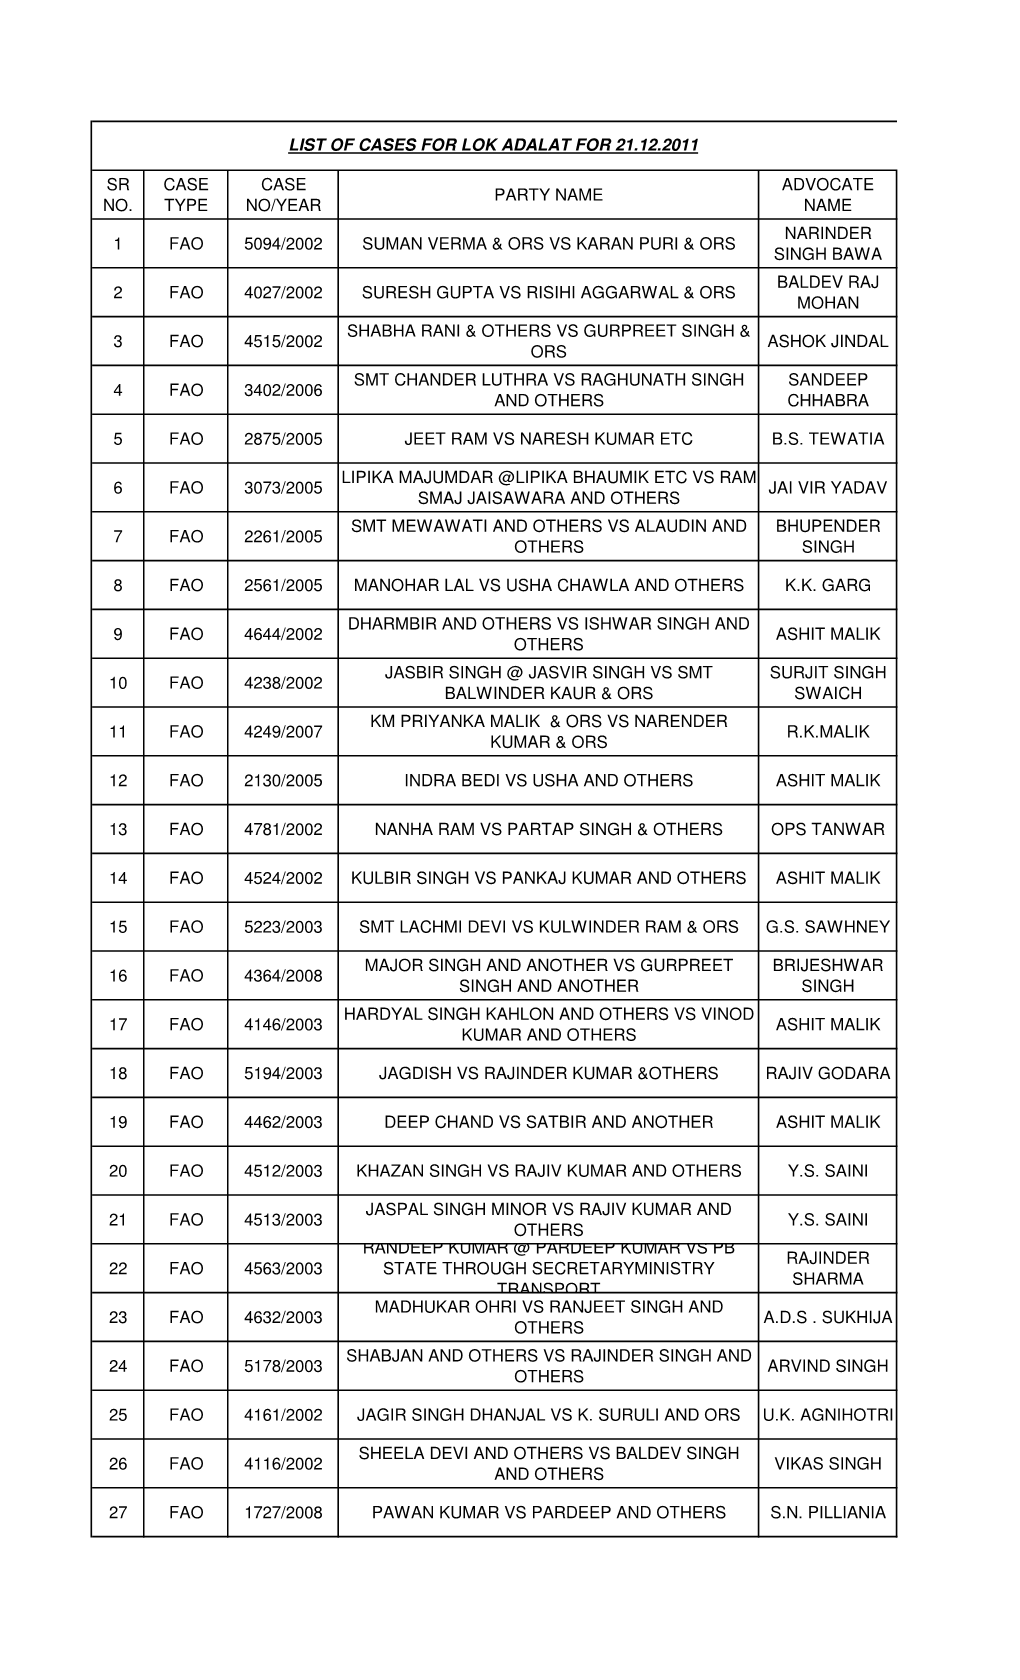 List of Cases for Lok Adalat for Ncc 21-12-2011